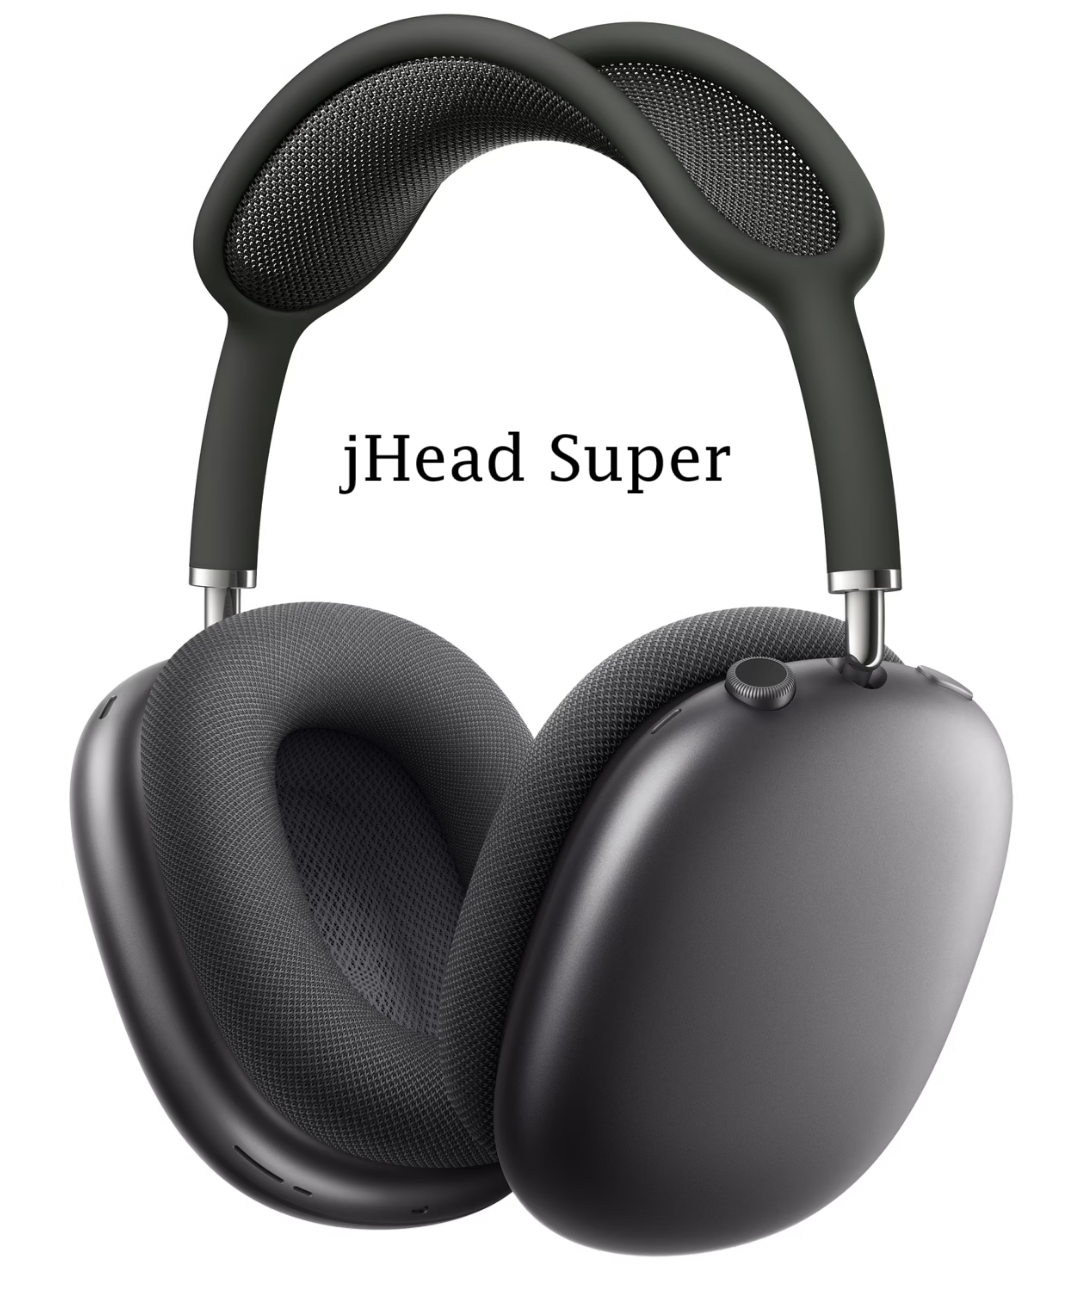 jHead Super | kabelloser Kopfhörer | Airoha 1561M | Alternative zu Apple Airpods Max